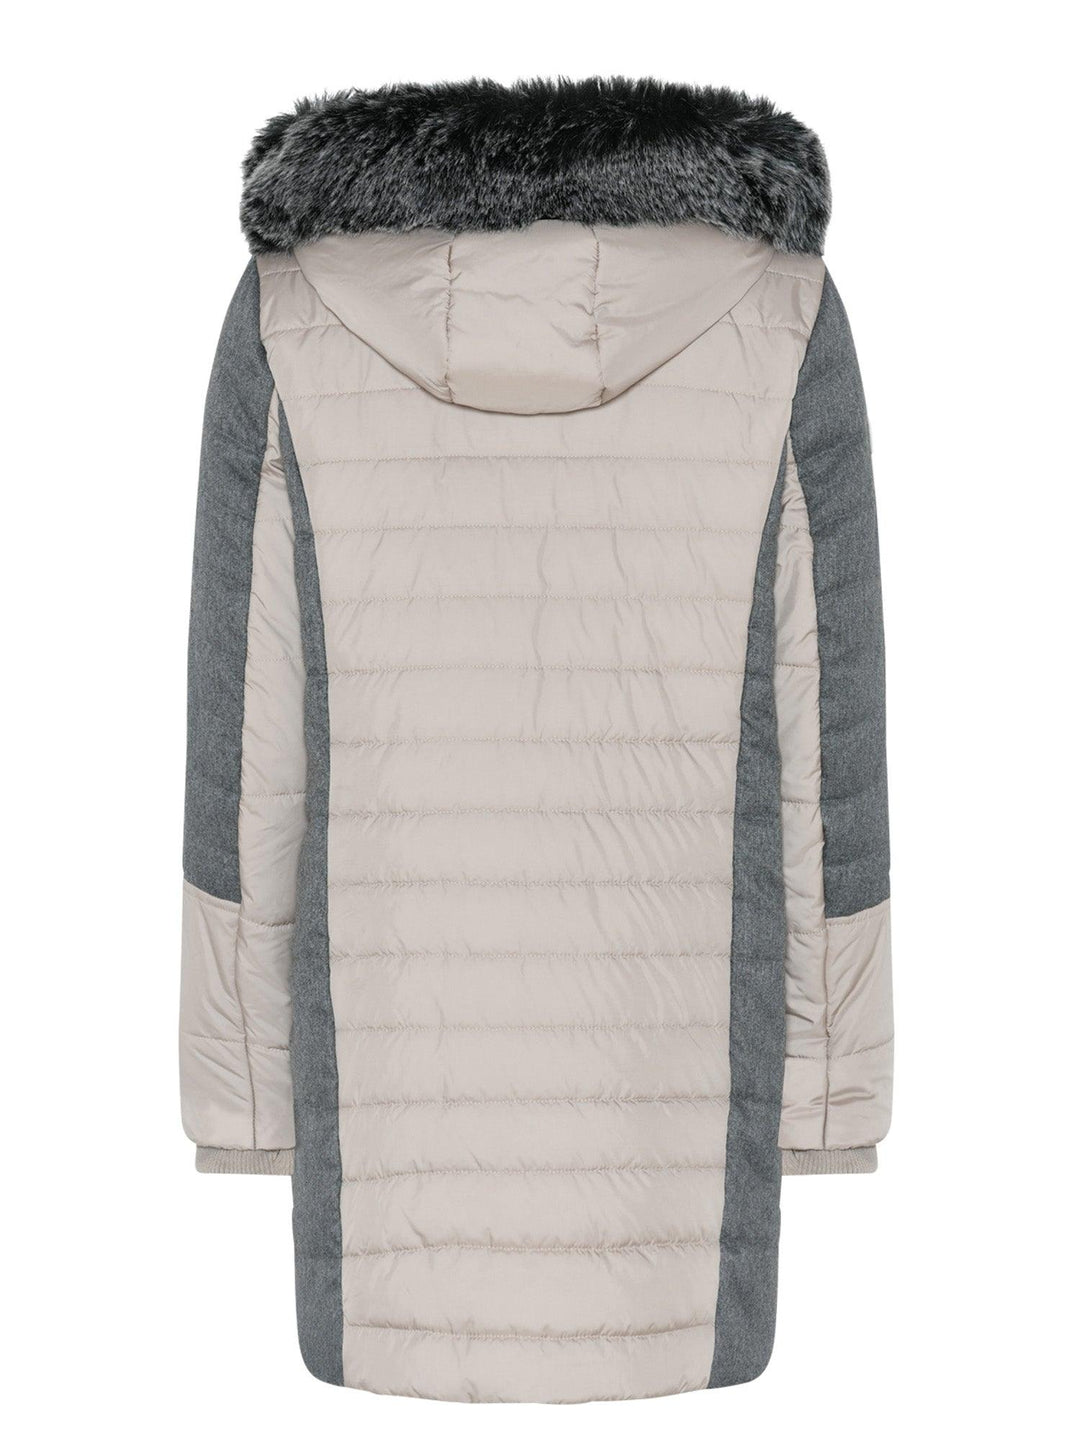 Normann Coat Style 522-20-1395 - AW22, Coat, Grey, Jacket, New, Off White ginasmartboutique